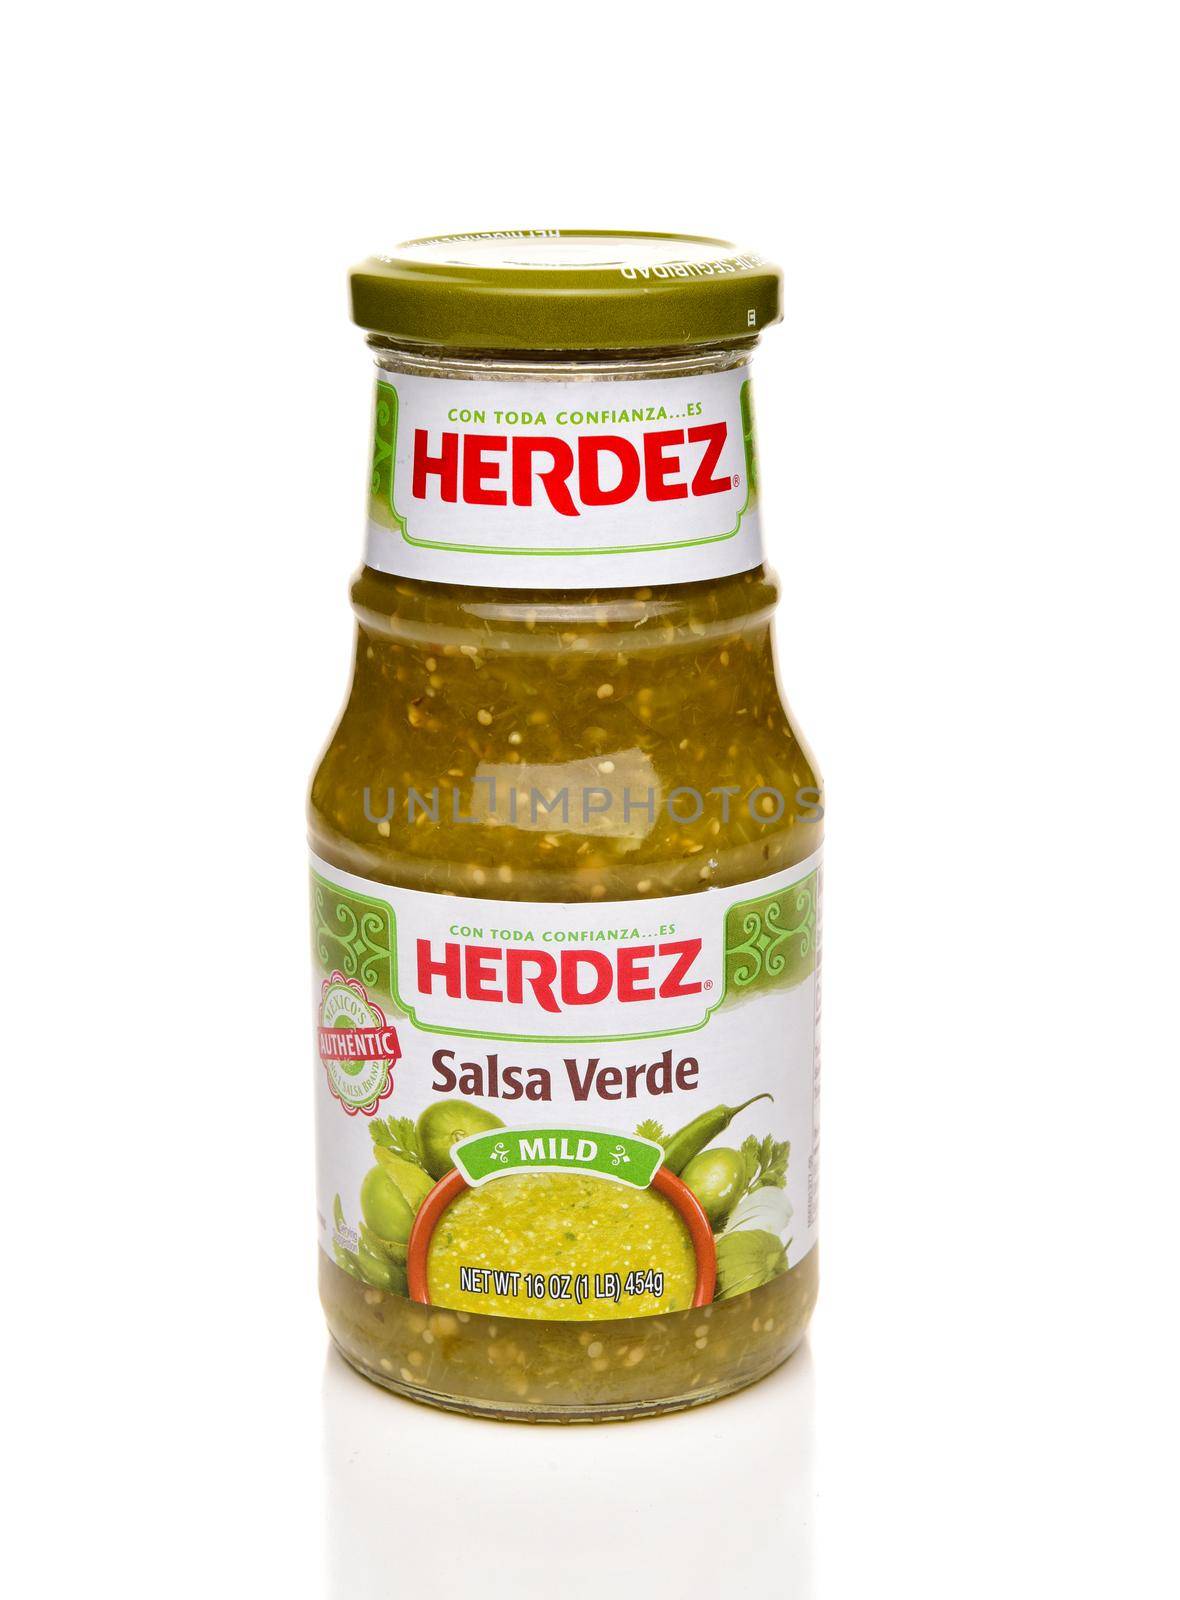 A 16 ounce jar of Herdez Salsa Verde by sCukrov